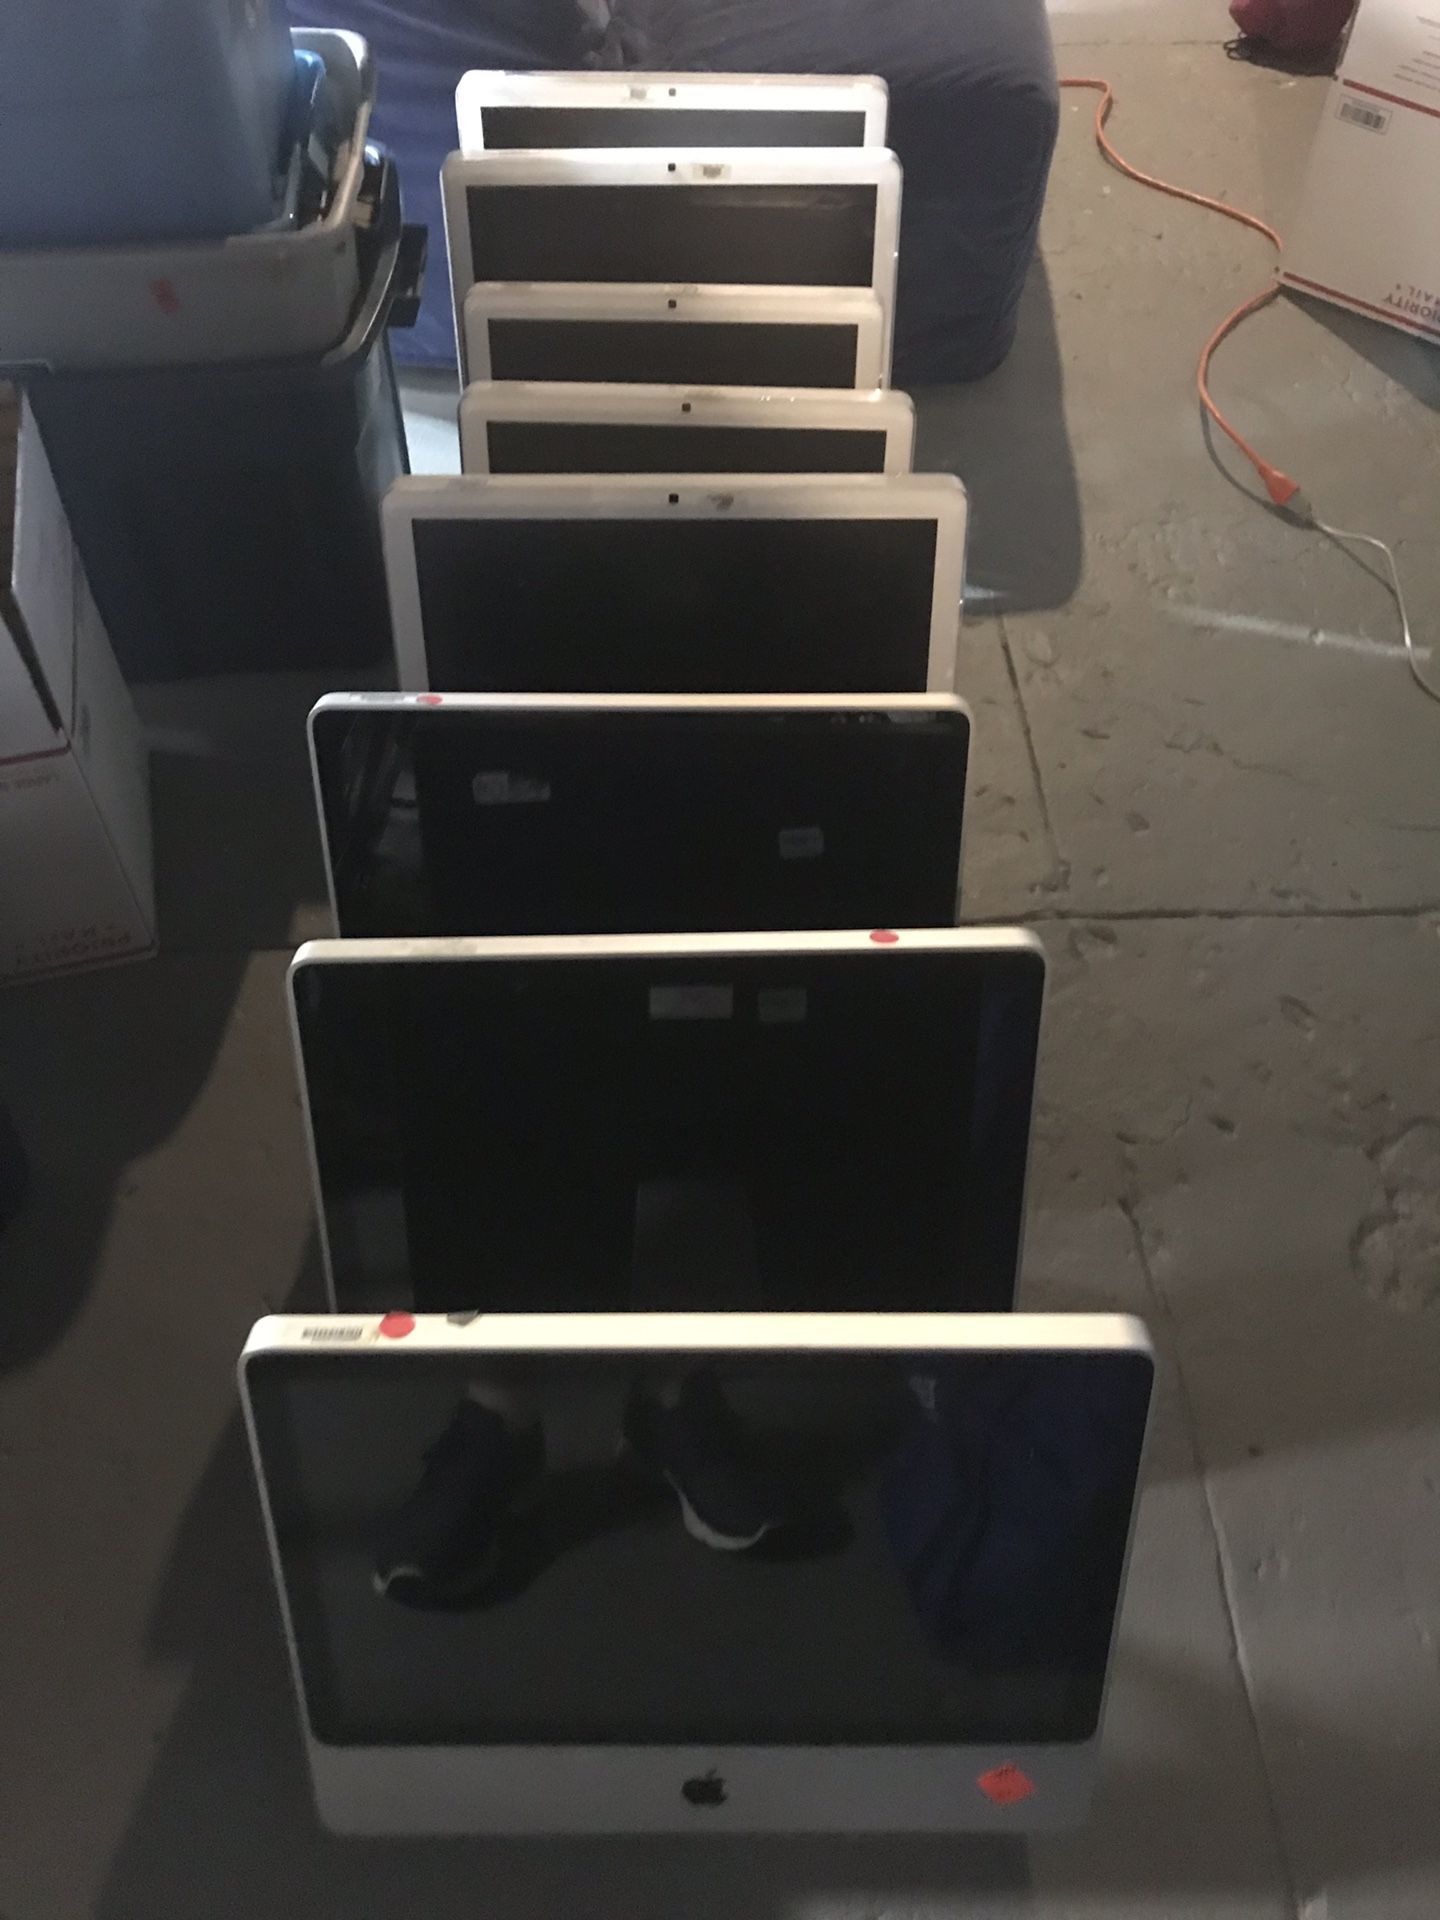 Lot of 8 Apple iMac Computers